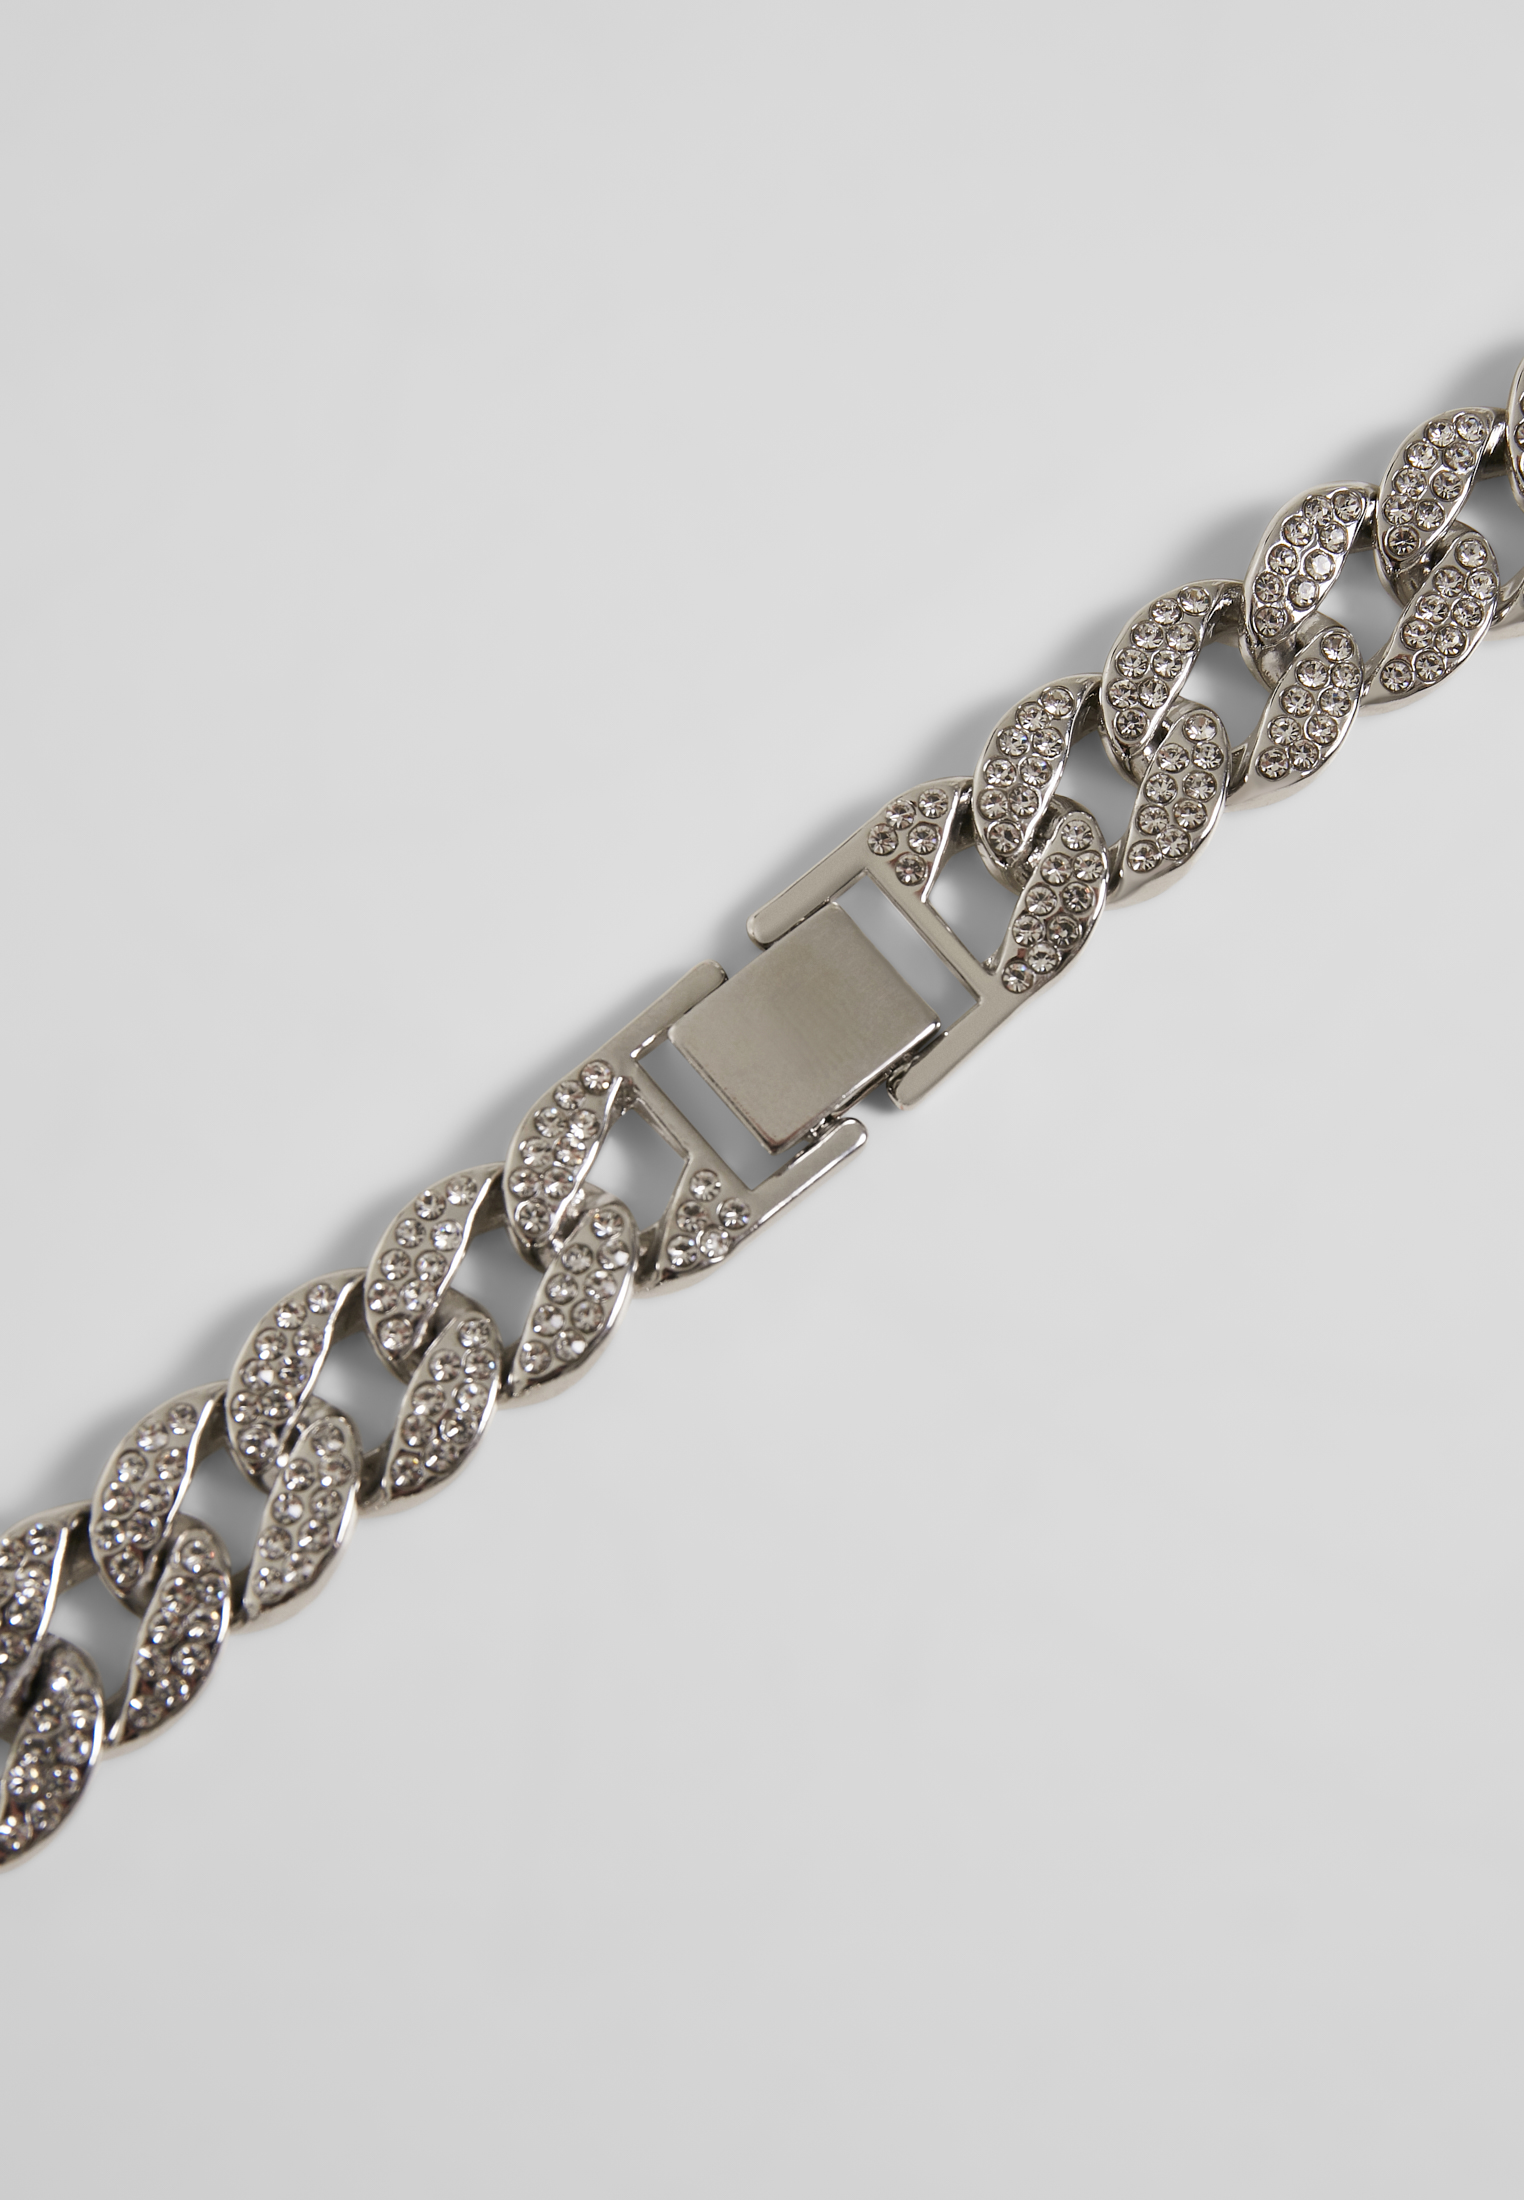 Schmuck Heavy Necklace With Stones in Farbe silver